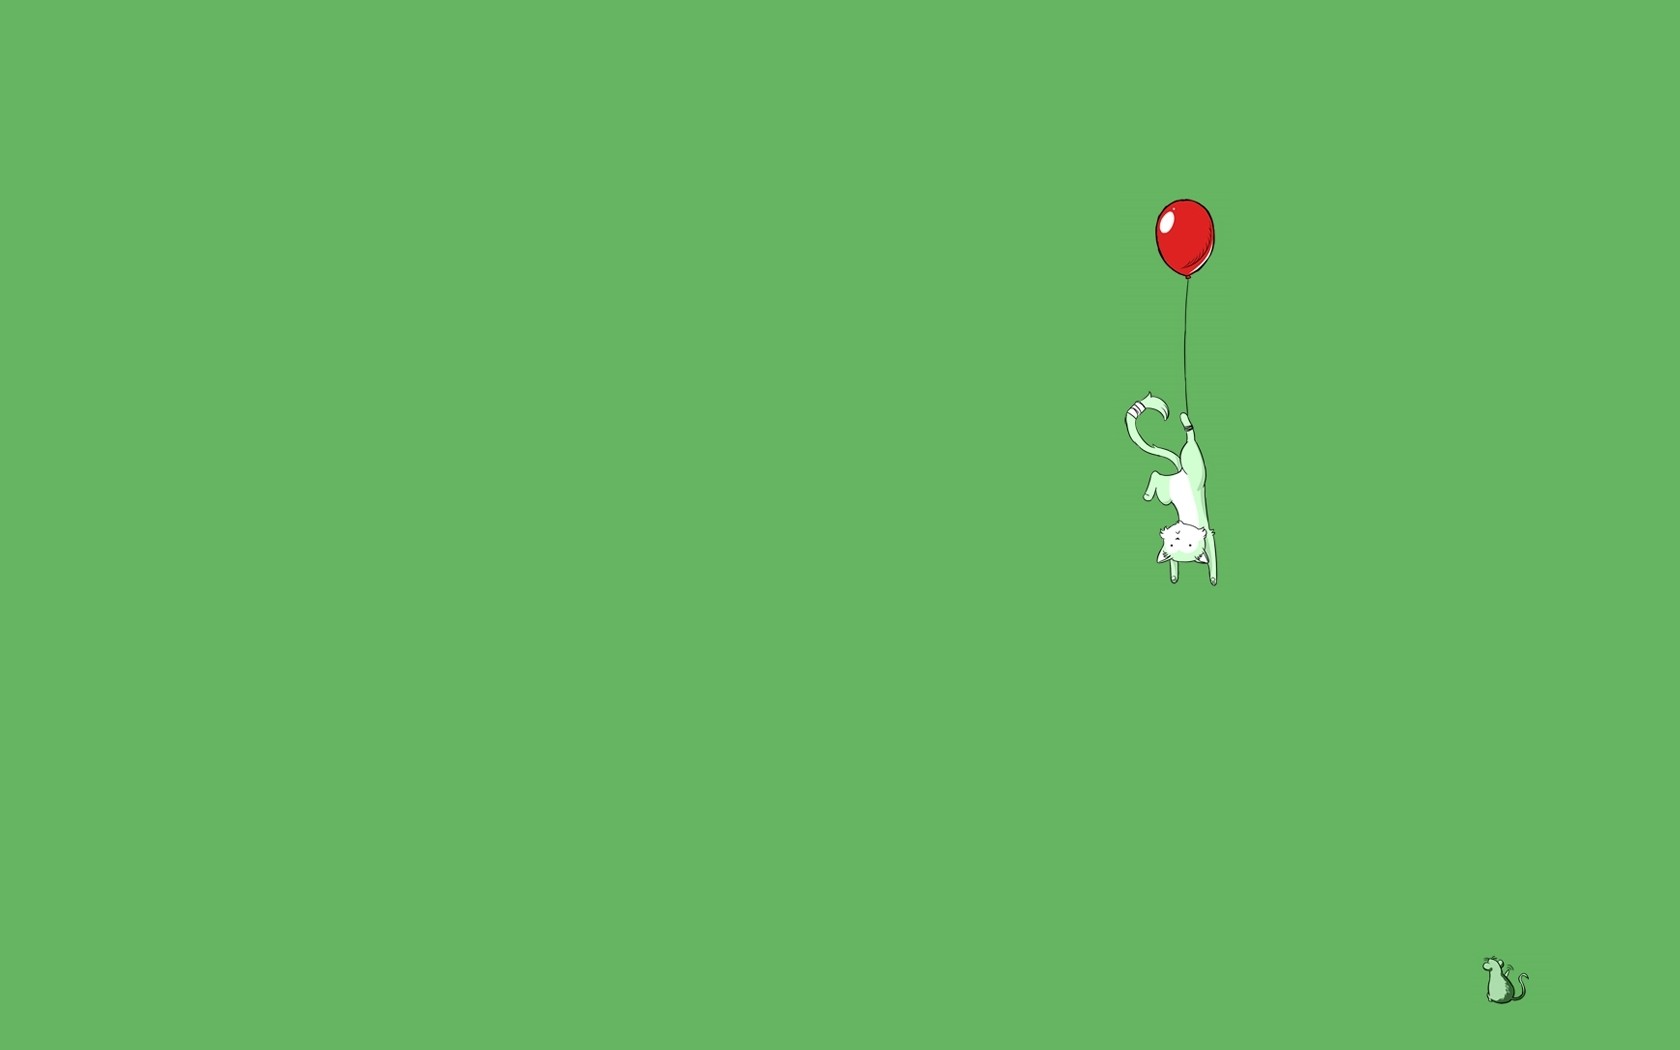 General 1680x1050 minimalism cats balloon green background simple background artwork animals mammals